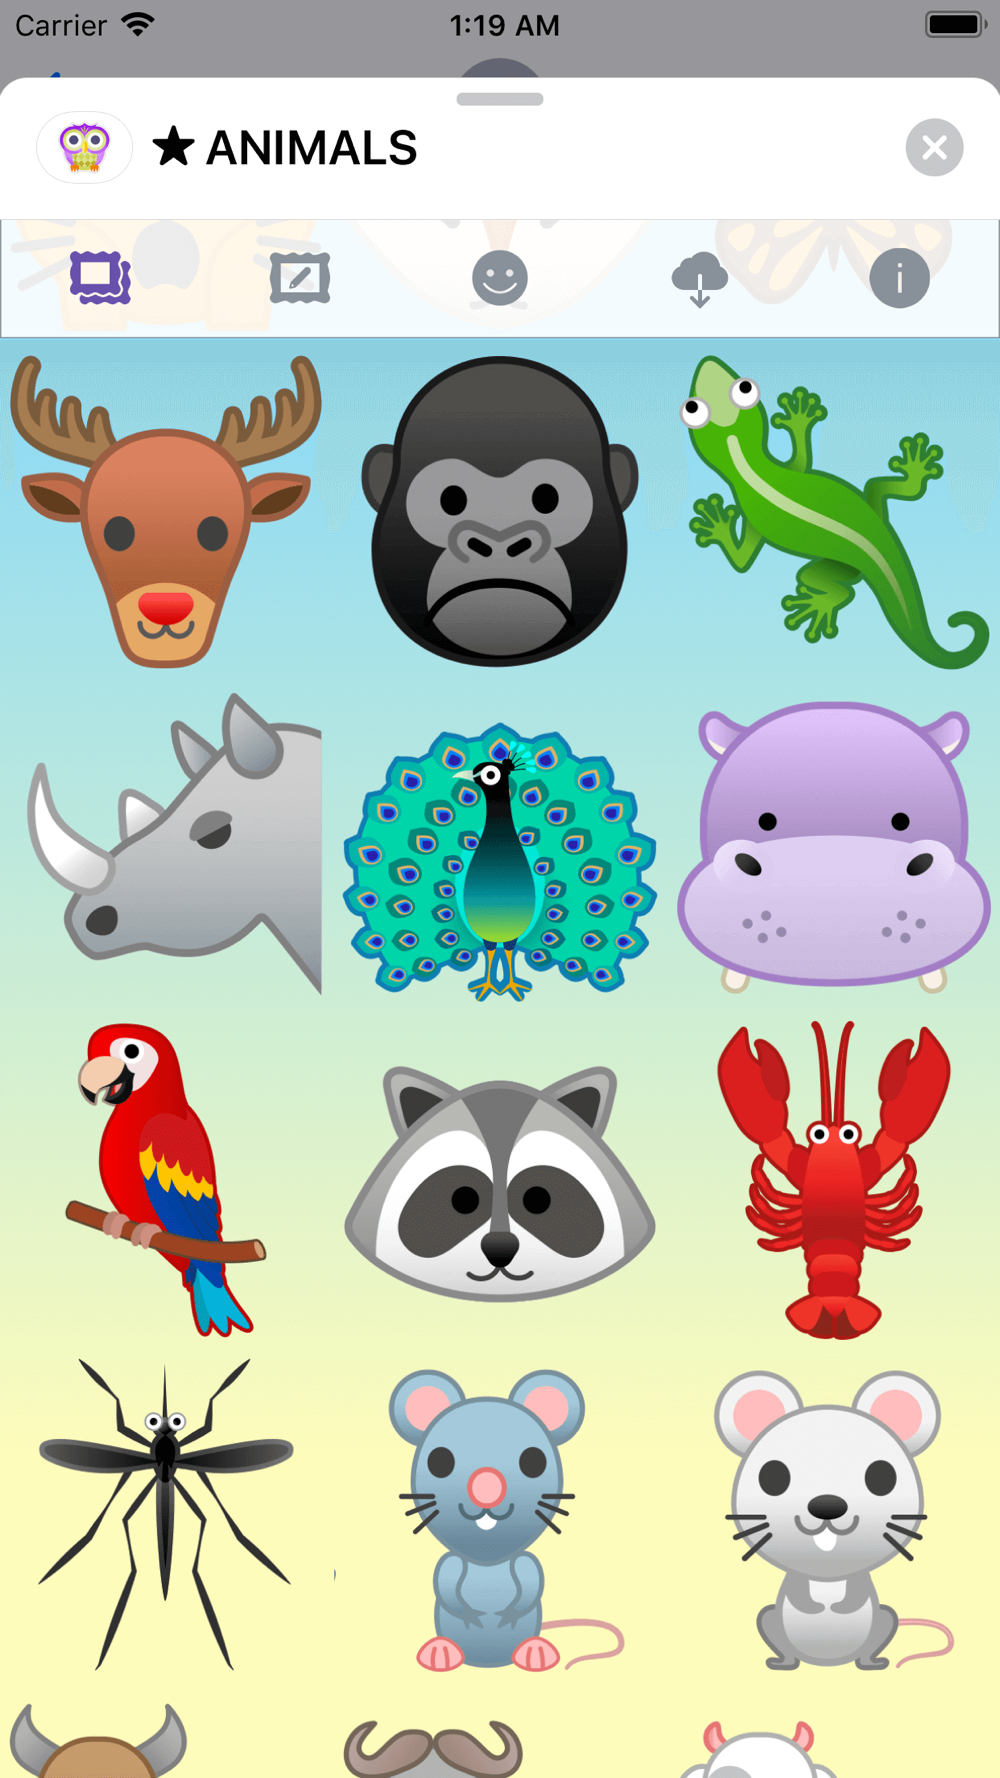 Animals Emoji • Stickers Download App for iPhone 